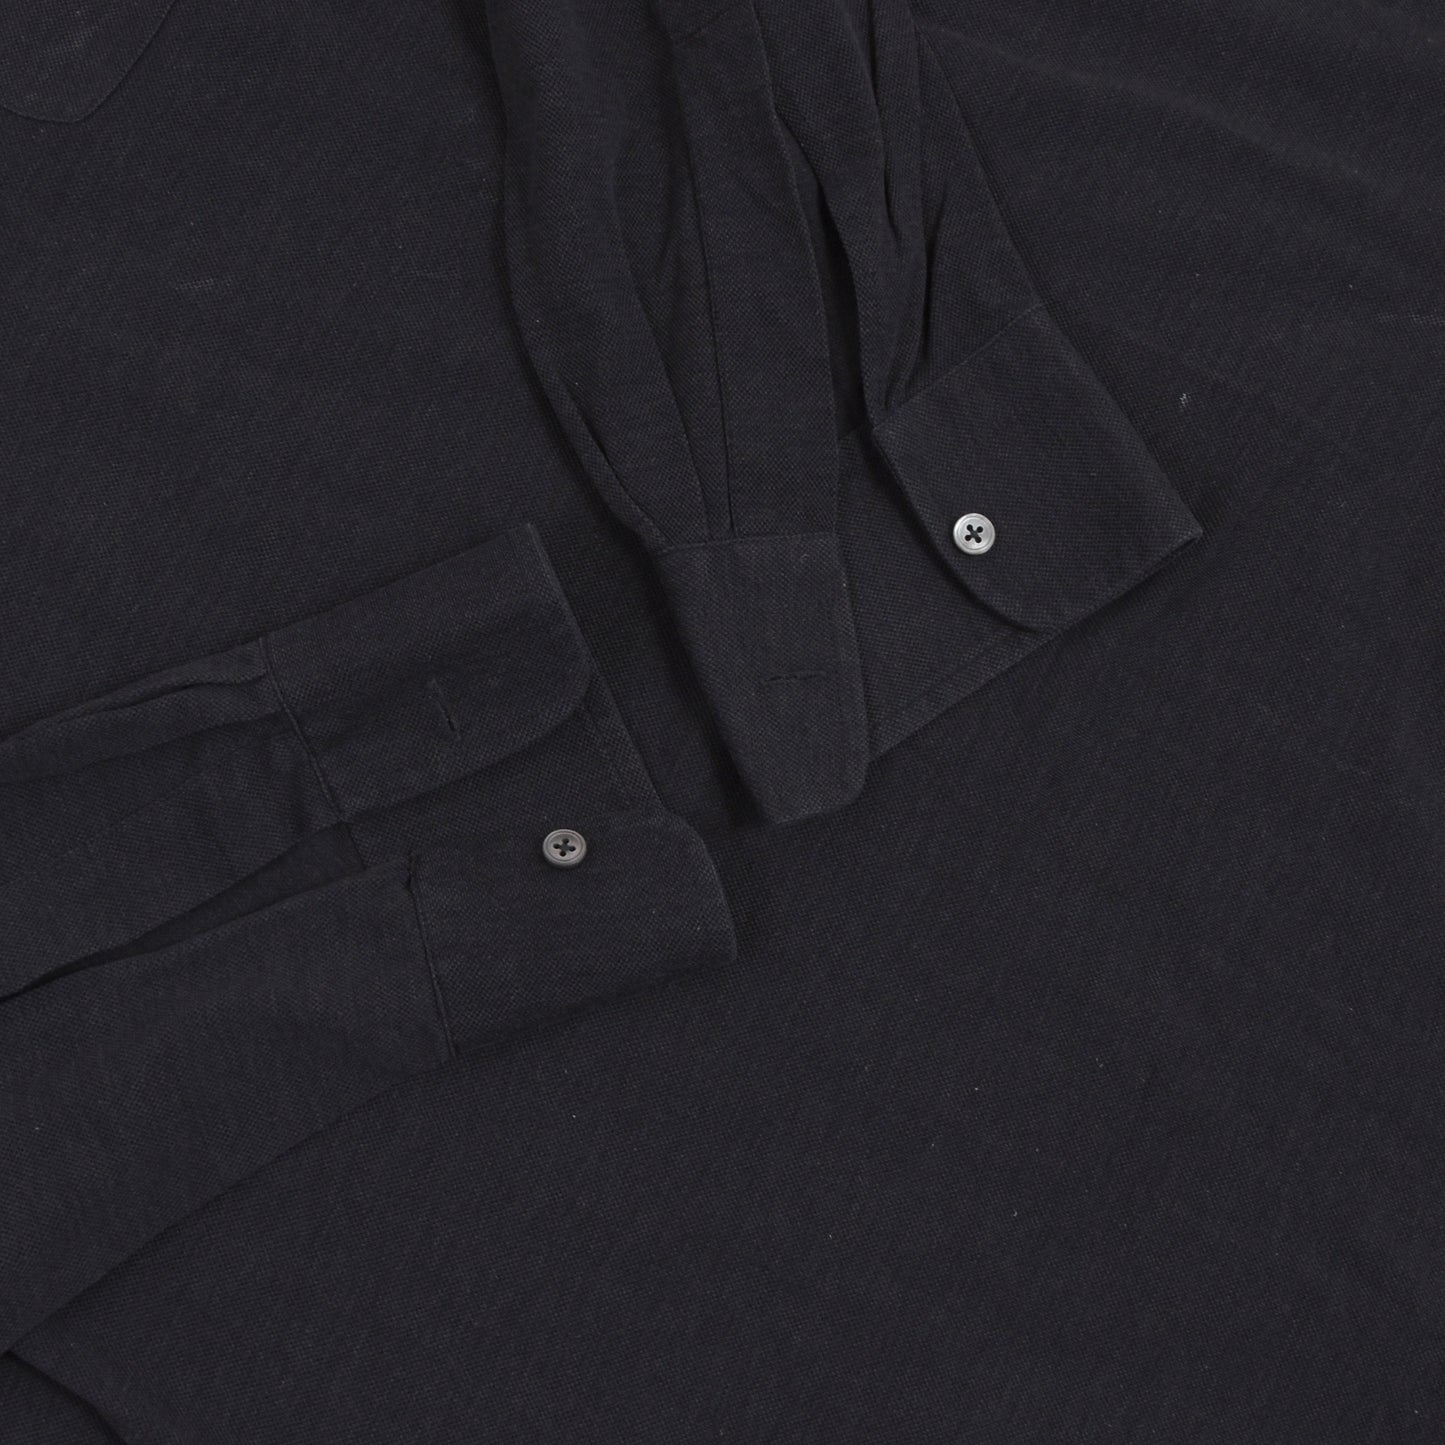 Anna Matuozzo Napoli Long Sleeved Polo Shirt Size Size 4XL/5XL  - Charcoal